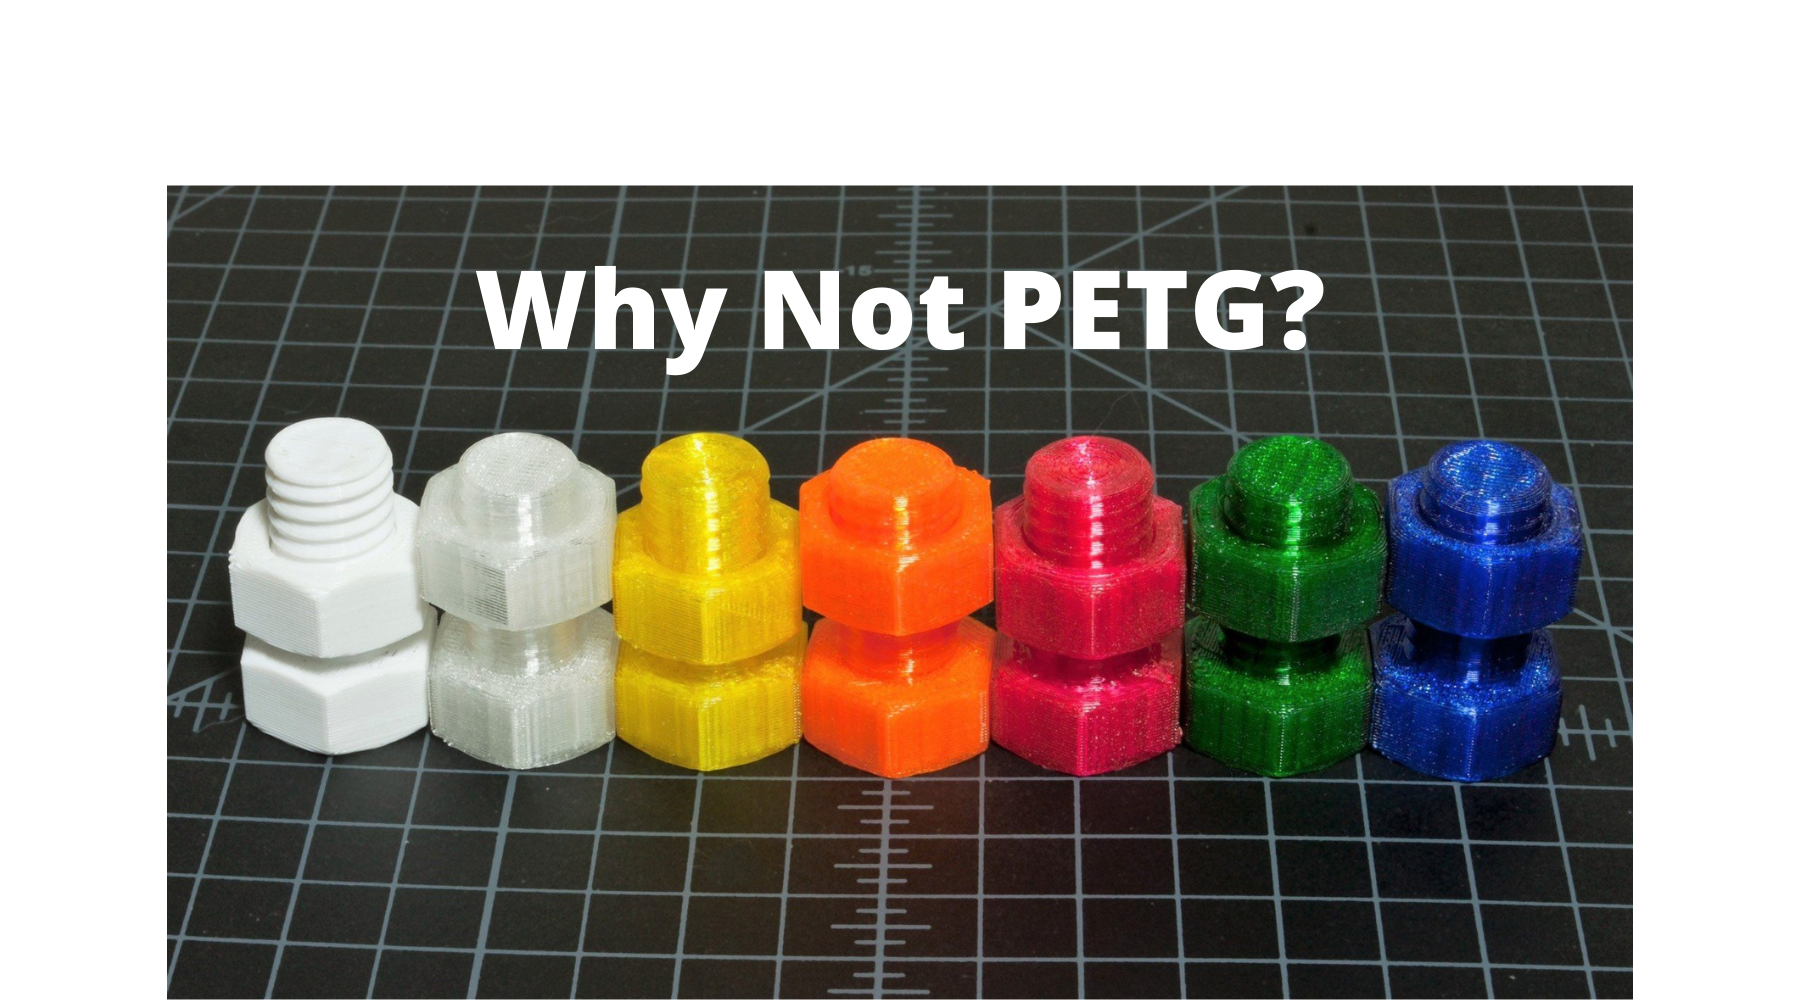 Why PETG?